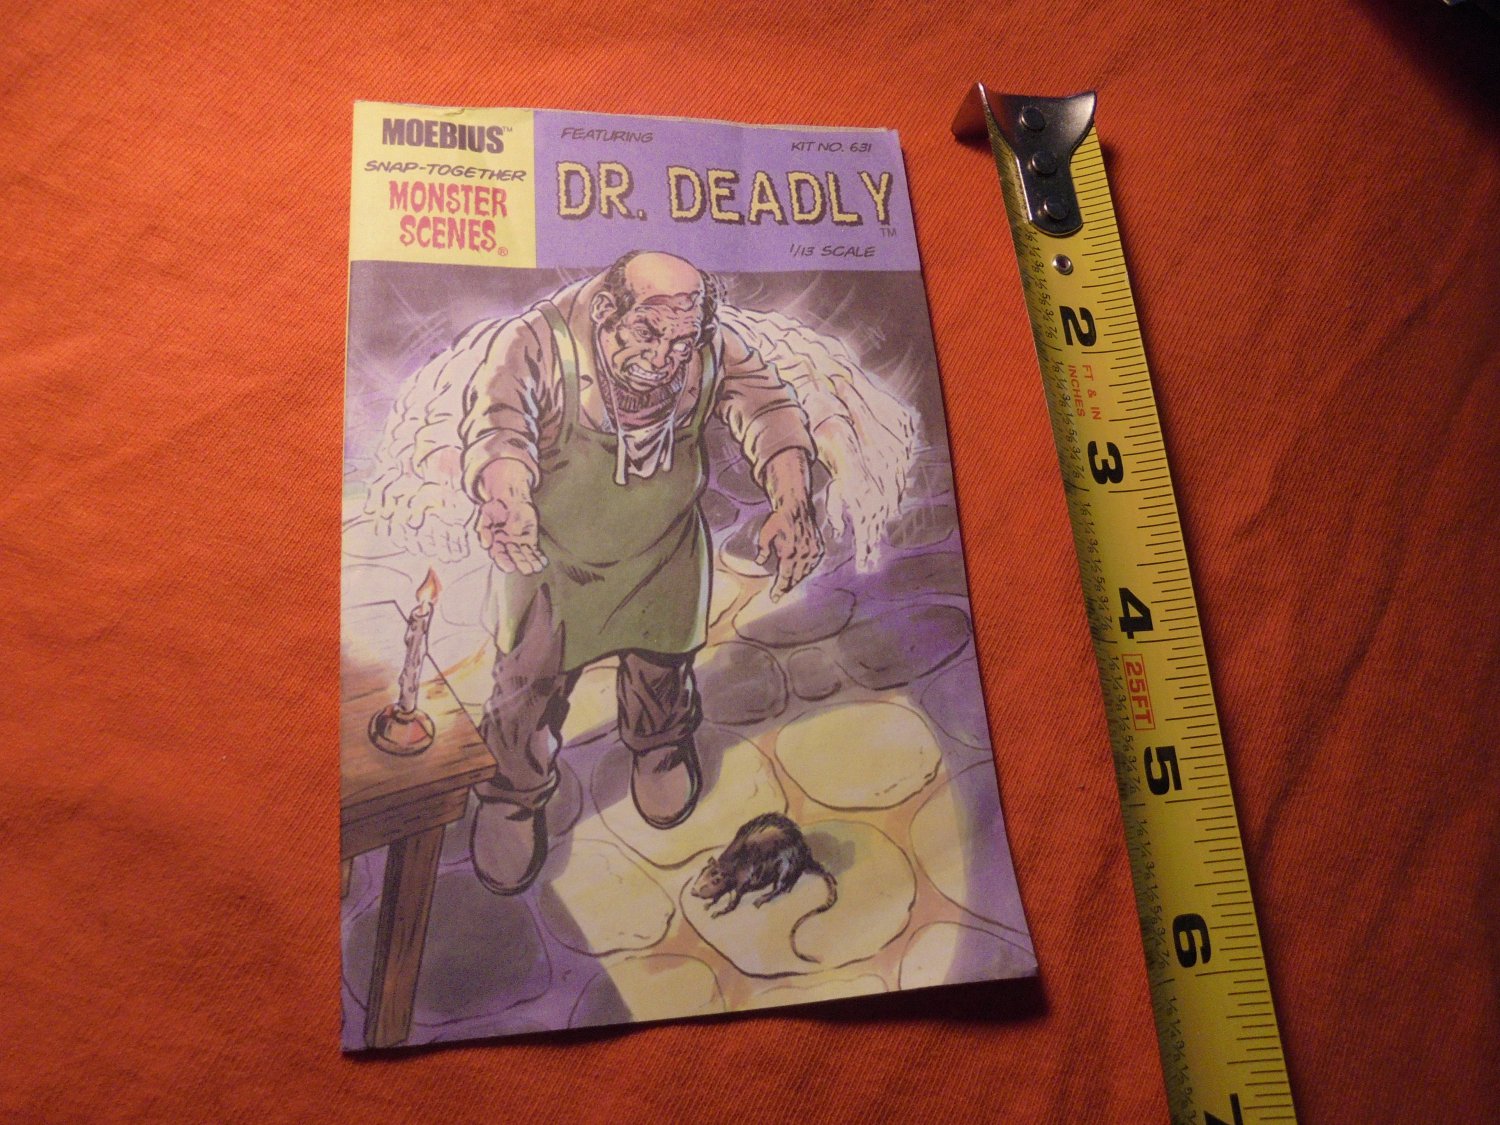 MONSTER SCENES DR. DEADLY MODEL KIT Instruction Booklet, Moebius Models! $5.00 OBO!